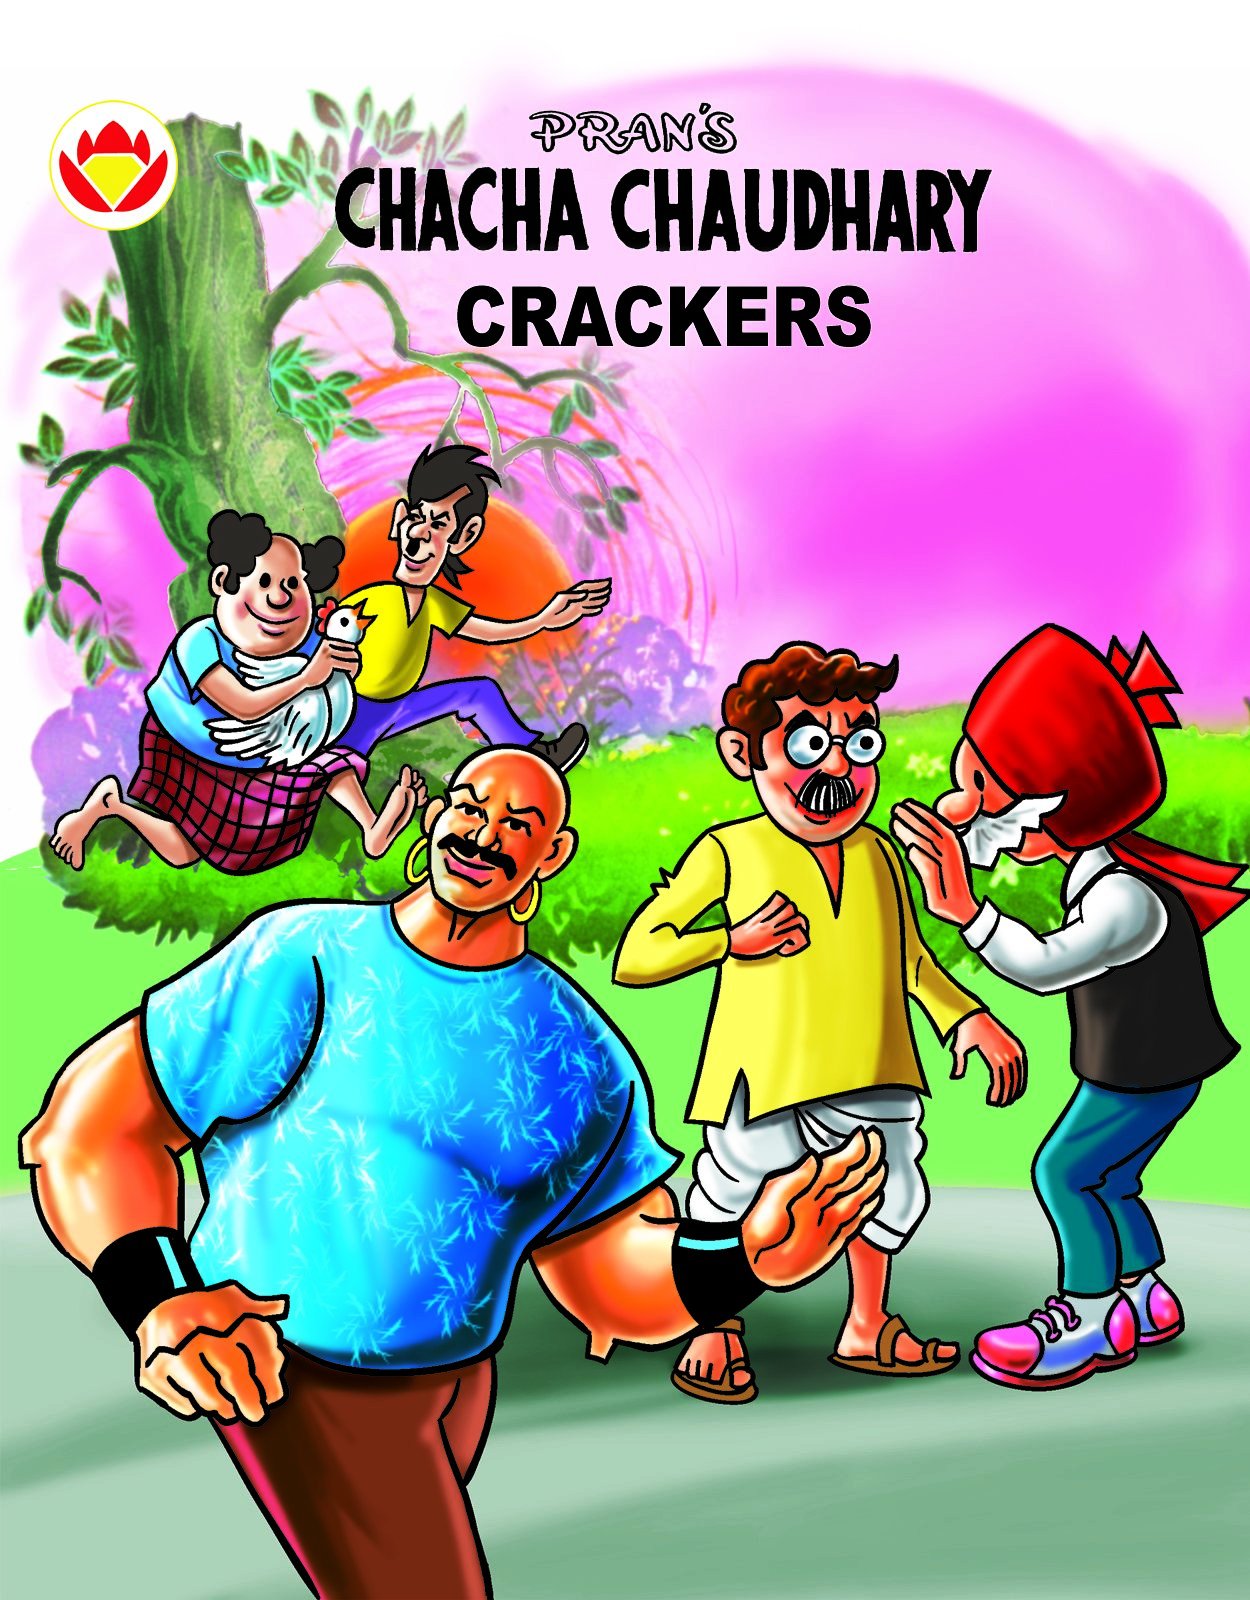 Chacha Chaudhary's Crackers